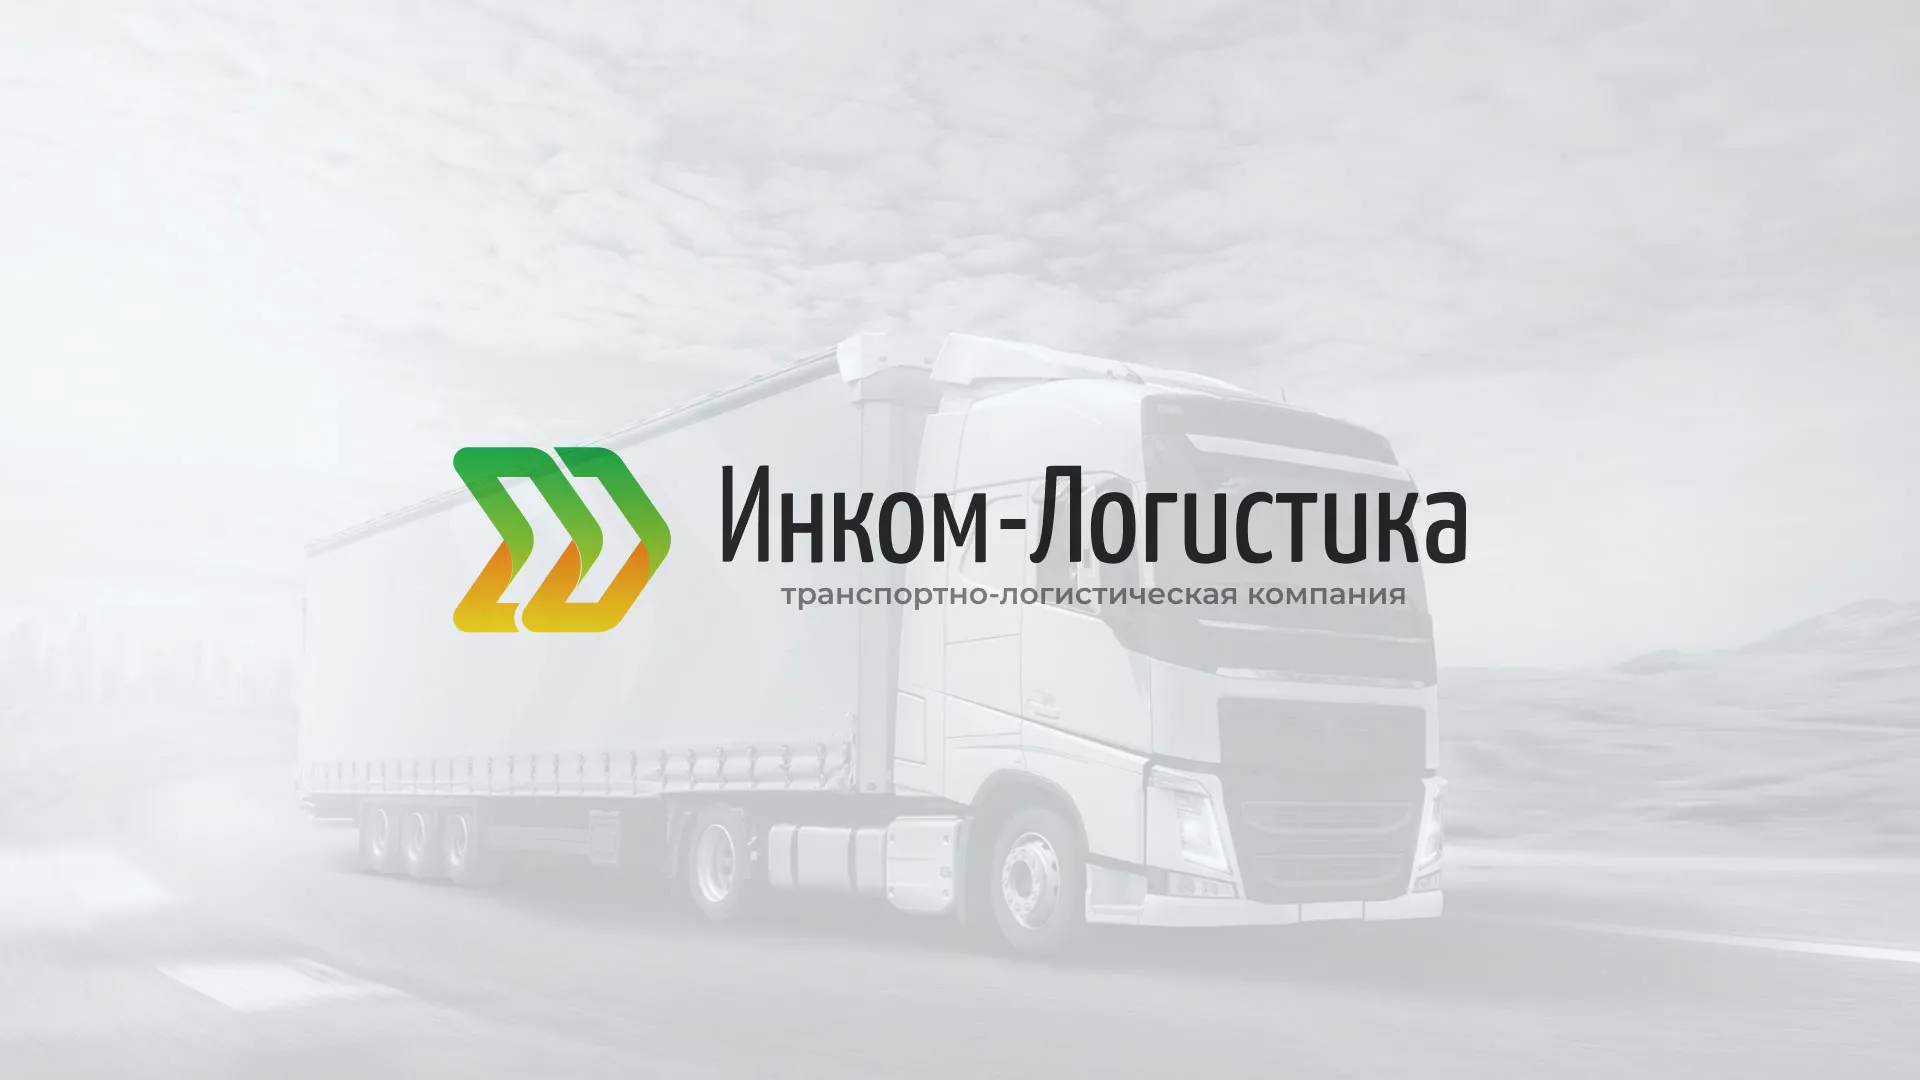 Разработка логотипа и сайта компании «Инком-Логистика» в Саранске